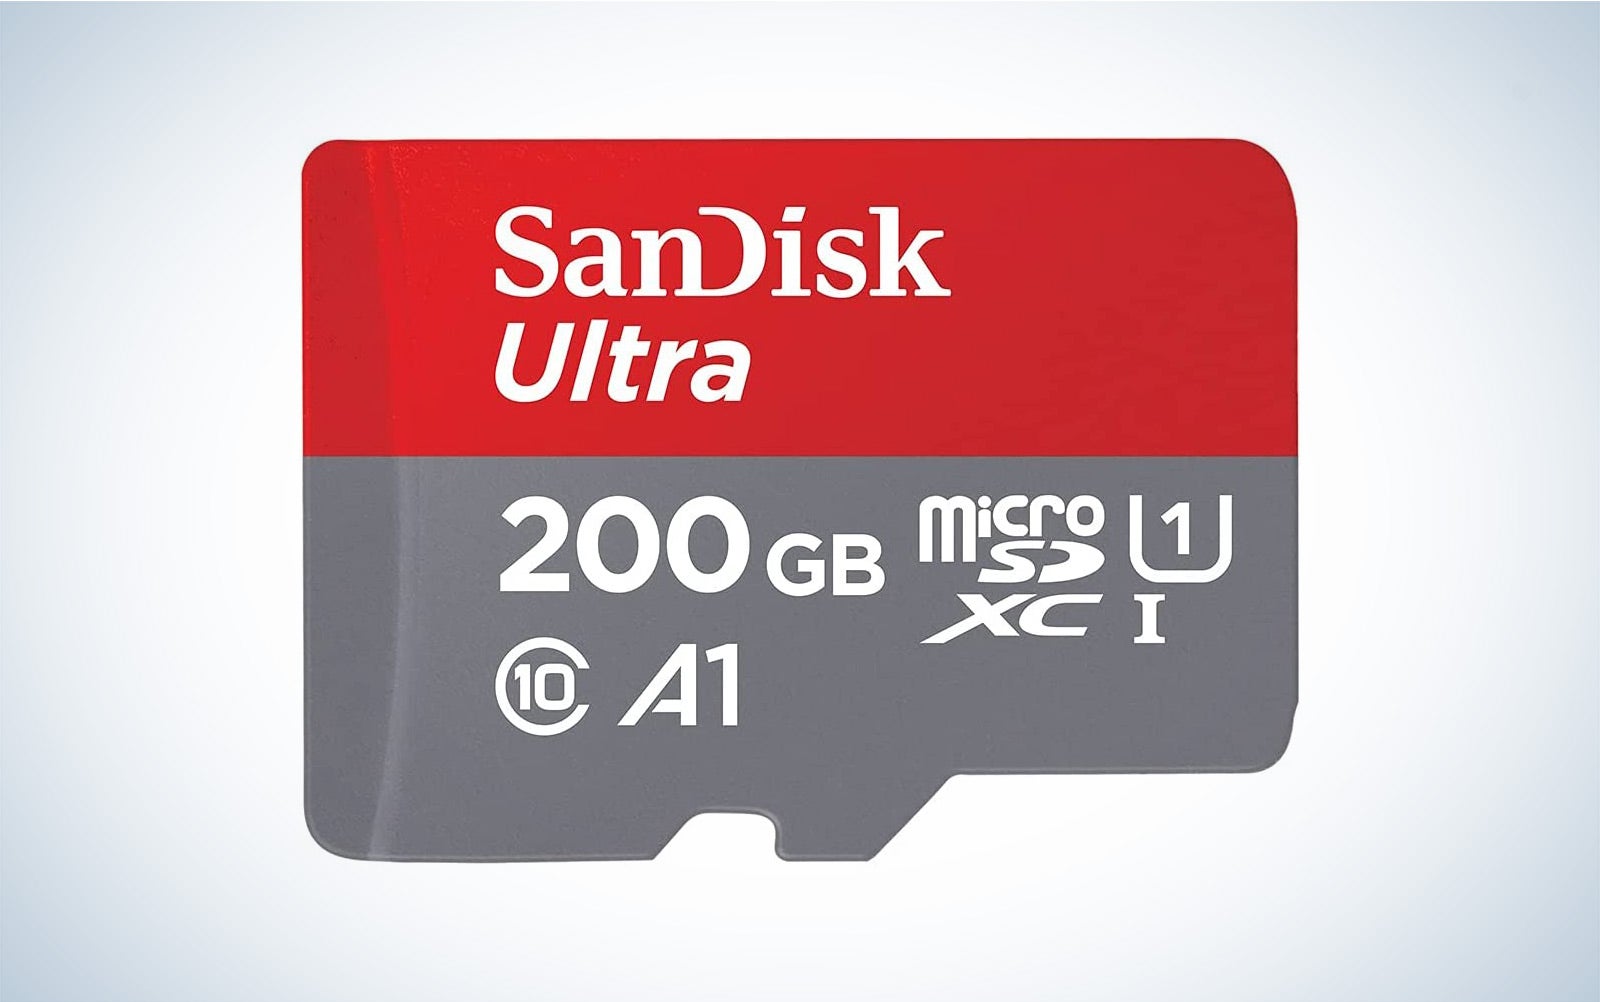 The SanDisk 200GB Ultra microSDXC is the best SDXC card.